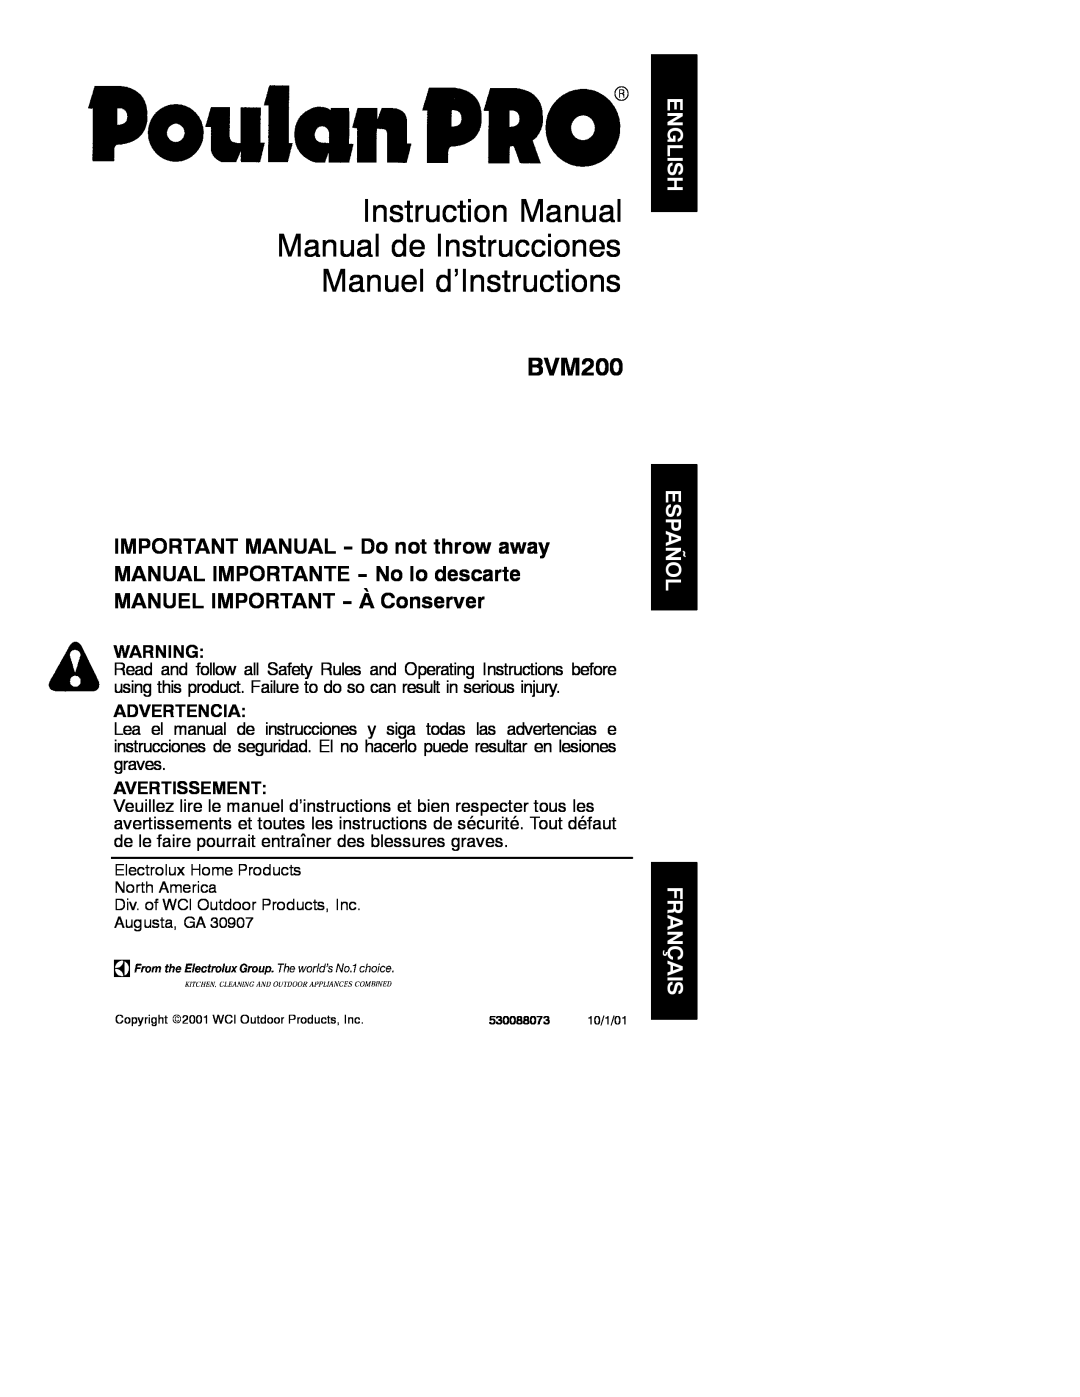 Poulan 530088073 instruction manual Manuel d’Instructions, BVM200, Advertencia, Avertissement 